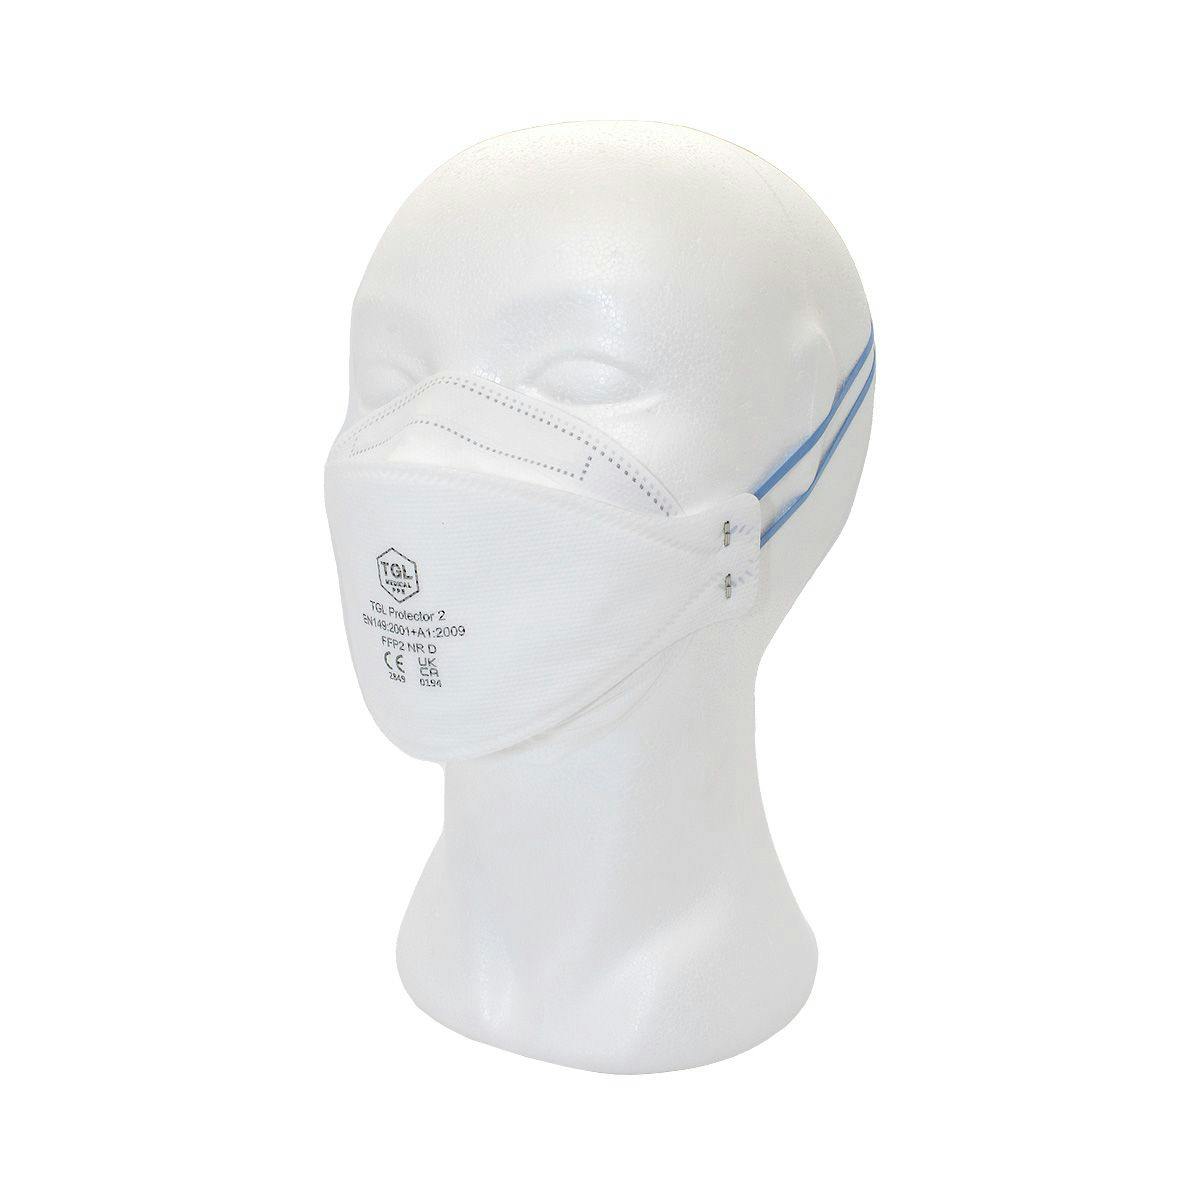 FFP2 COVID-19 Medical Respirator Mask